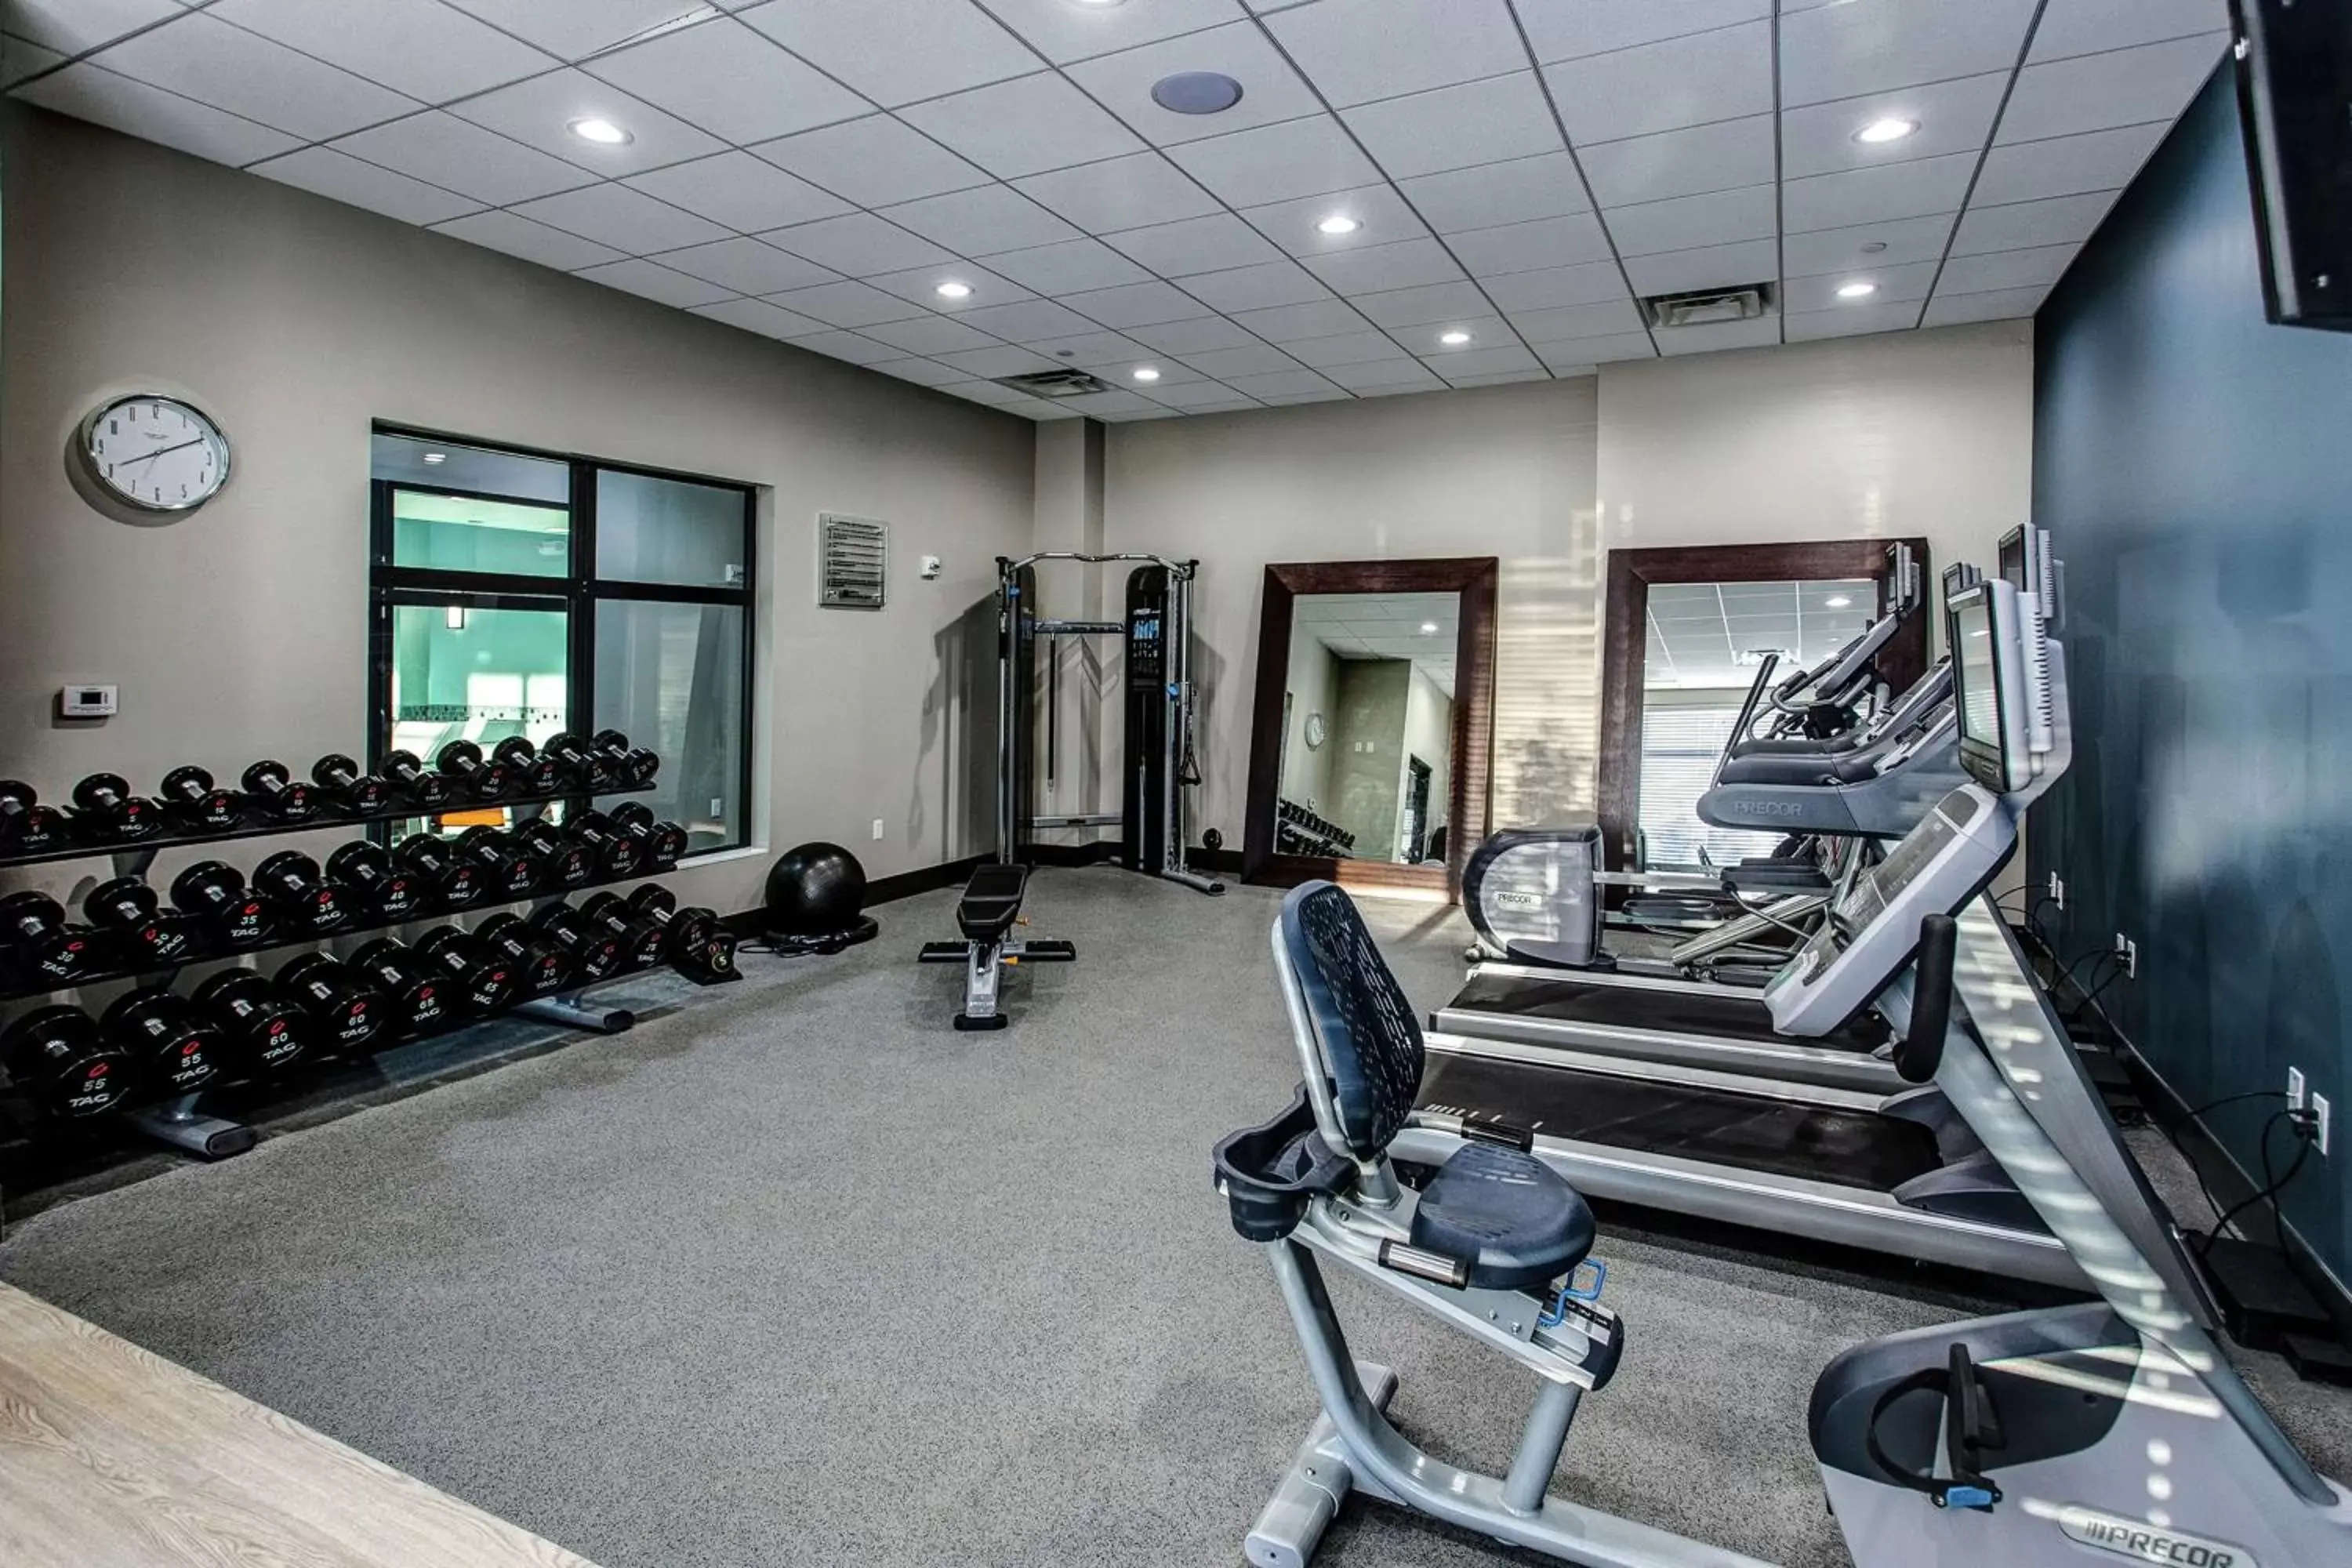 Fitness centre/facilities, Fitness Center/Facilities in Hilton Garden Inn Topeka